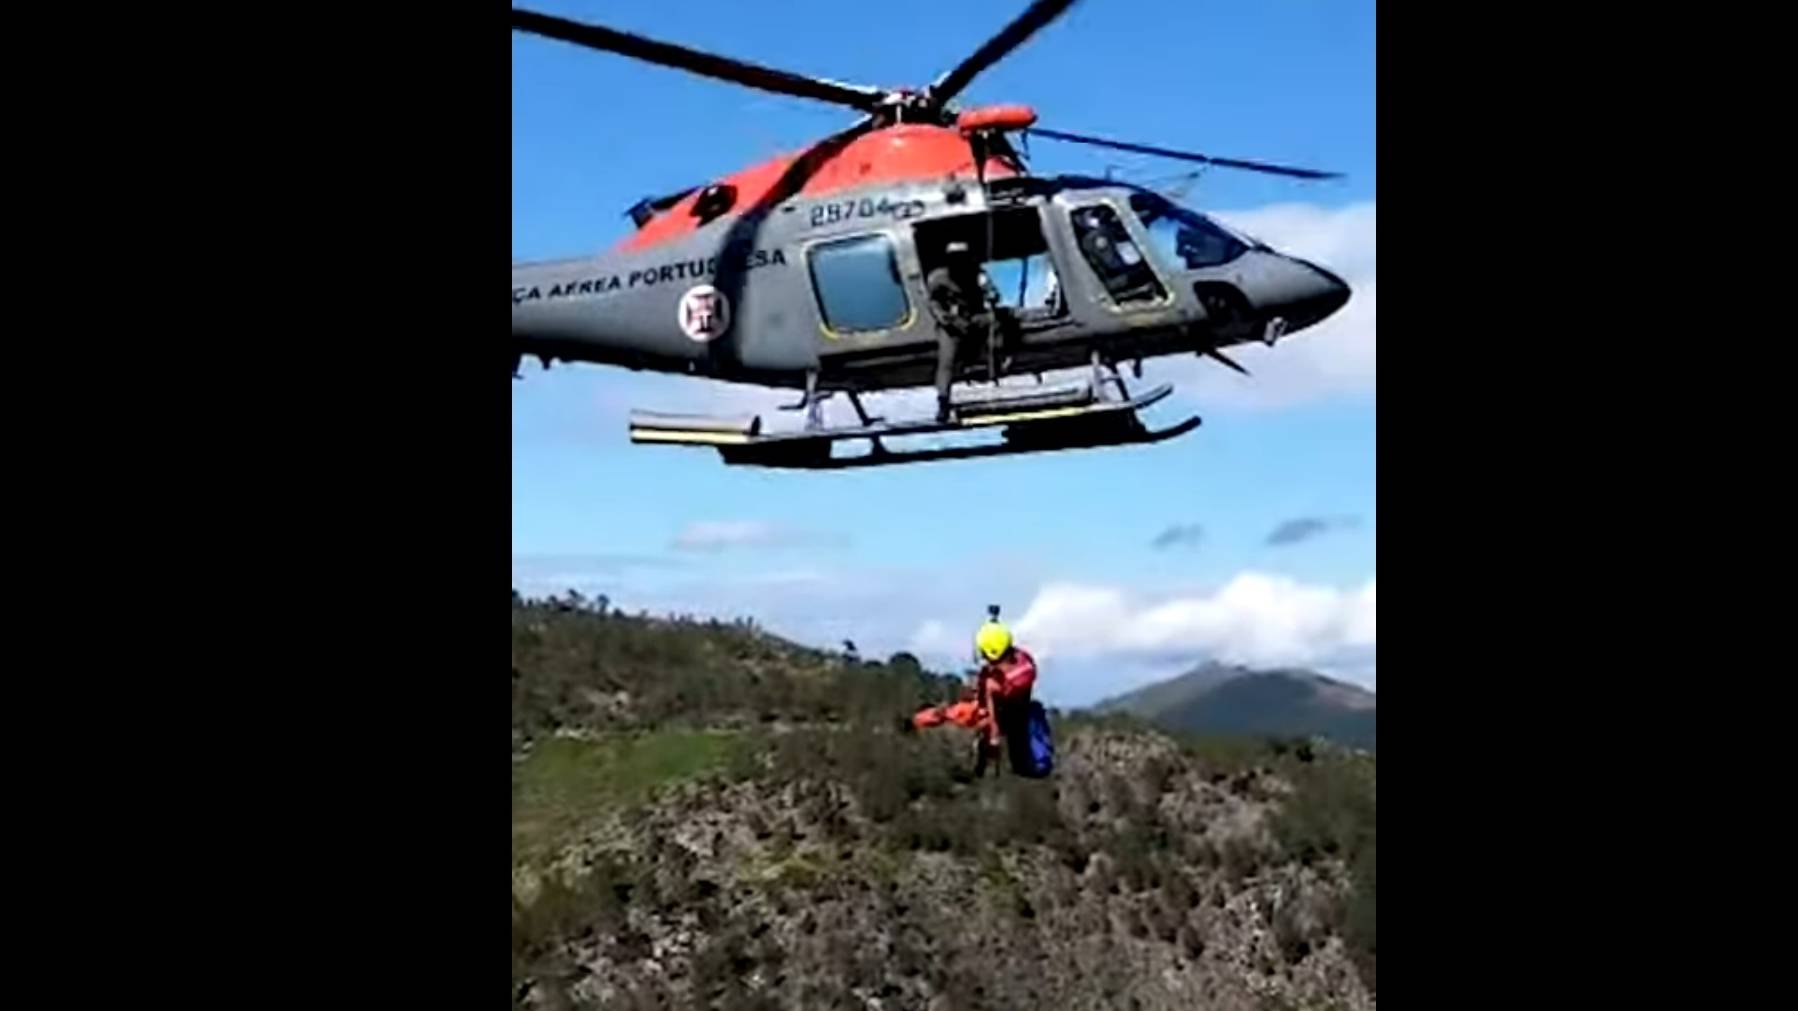 Fora Area resgata ferido em ravina na Serra da Estrela